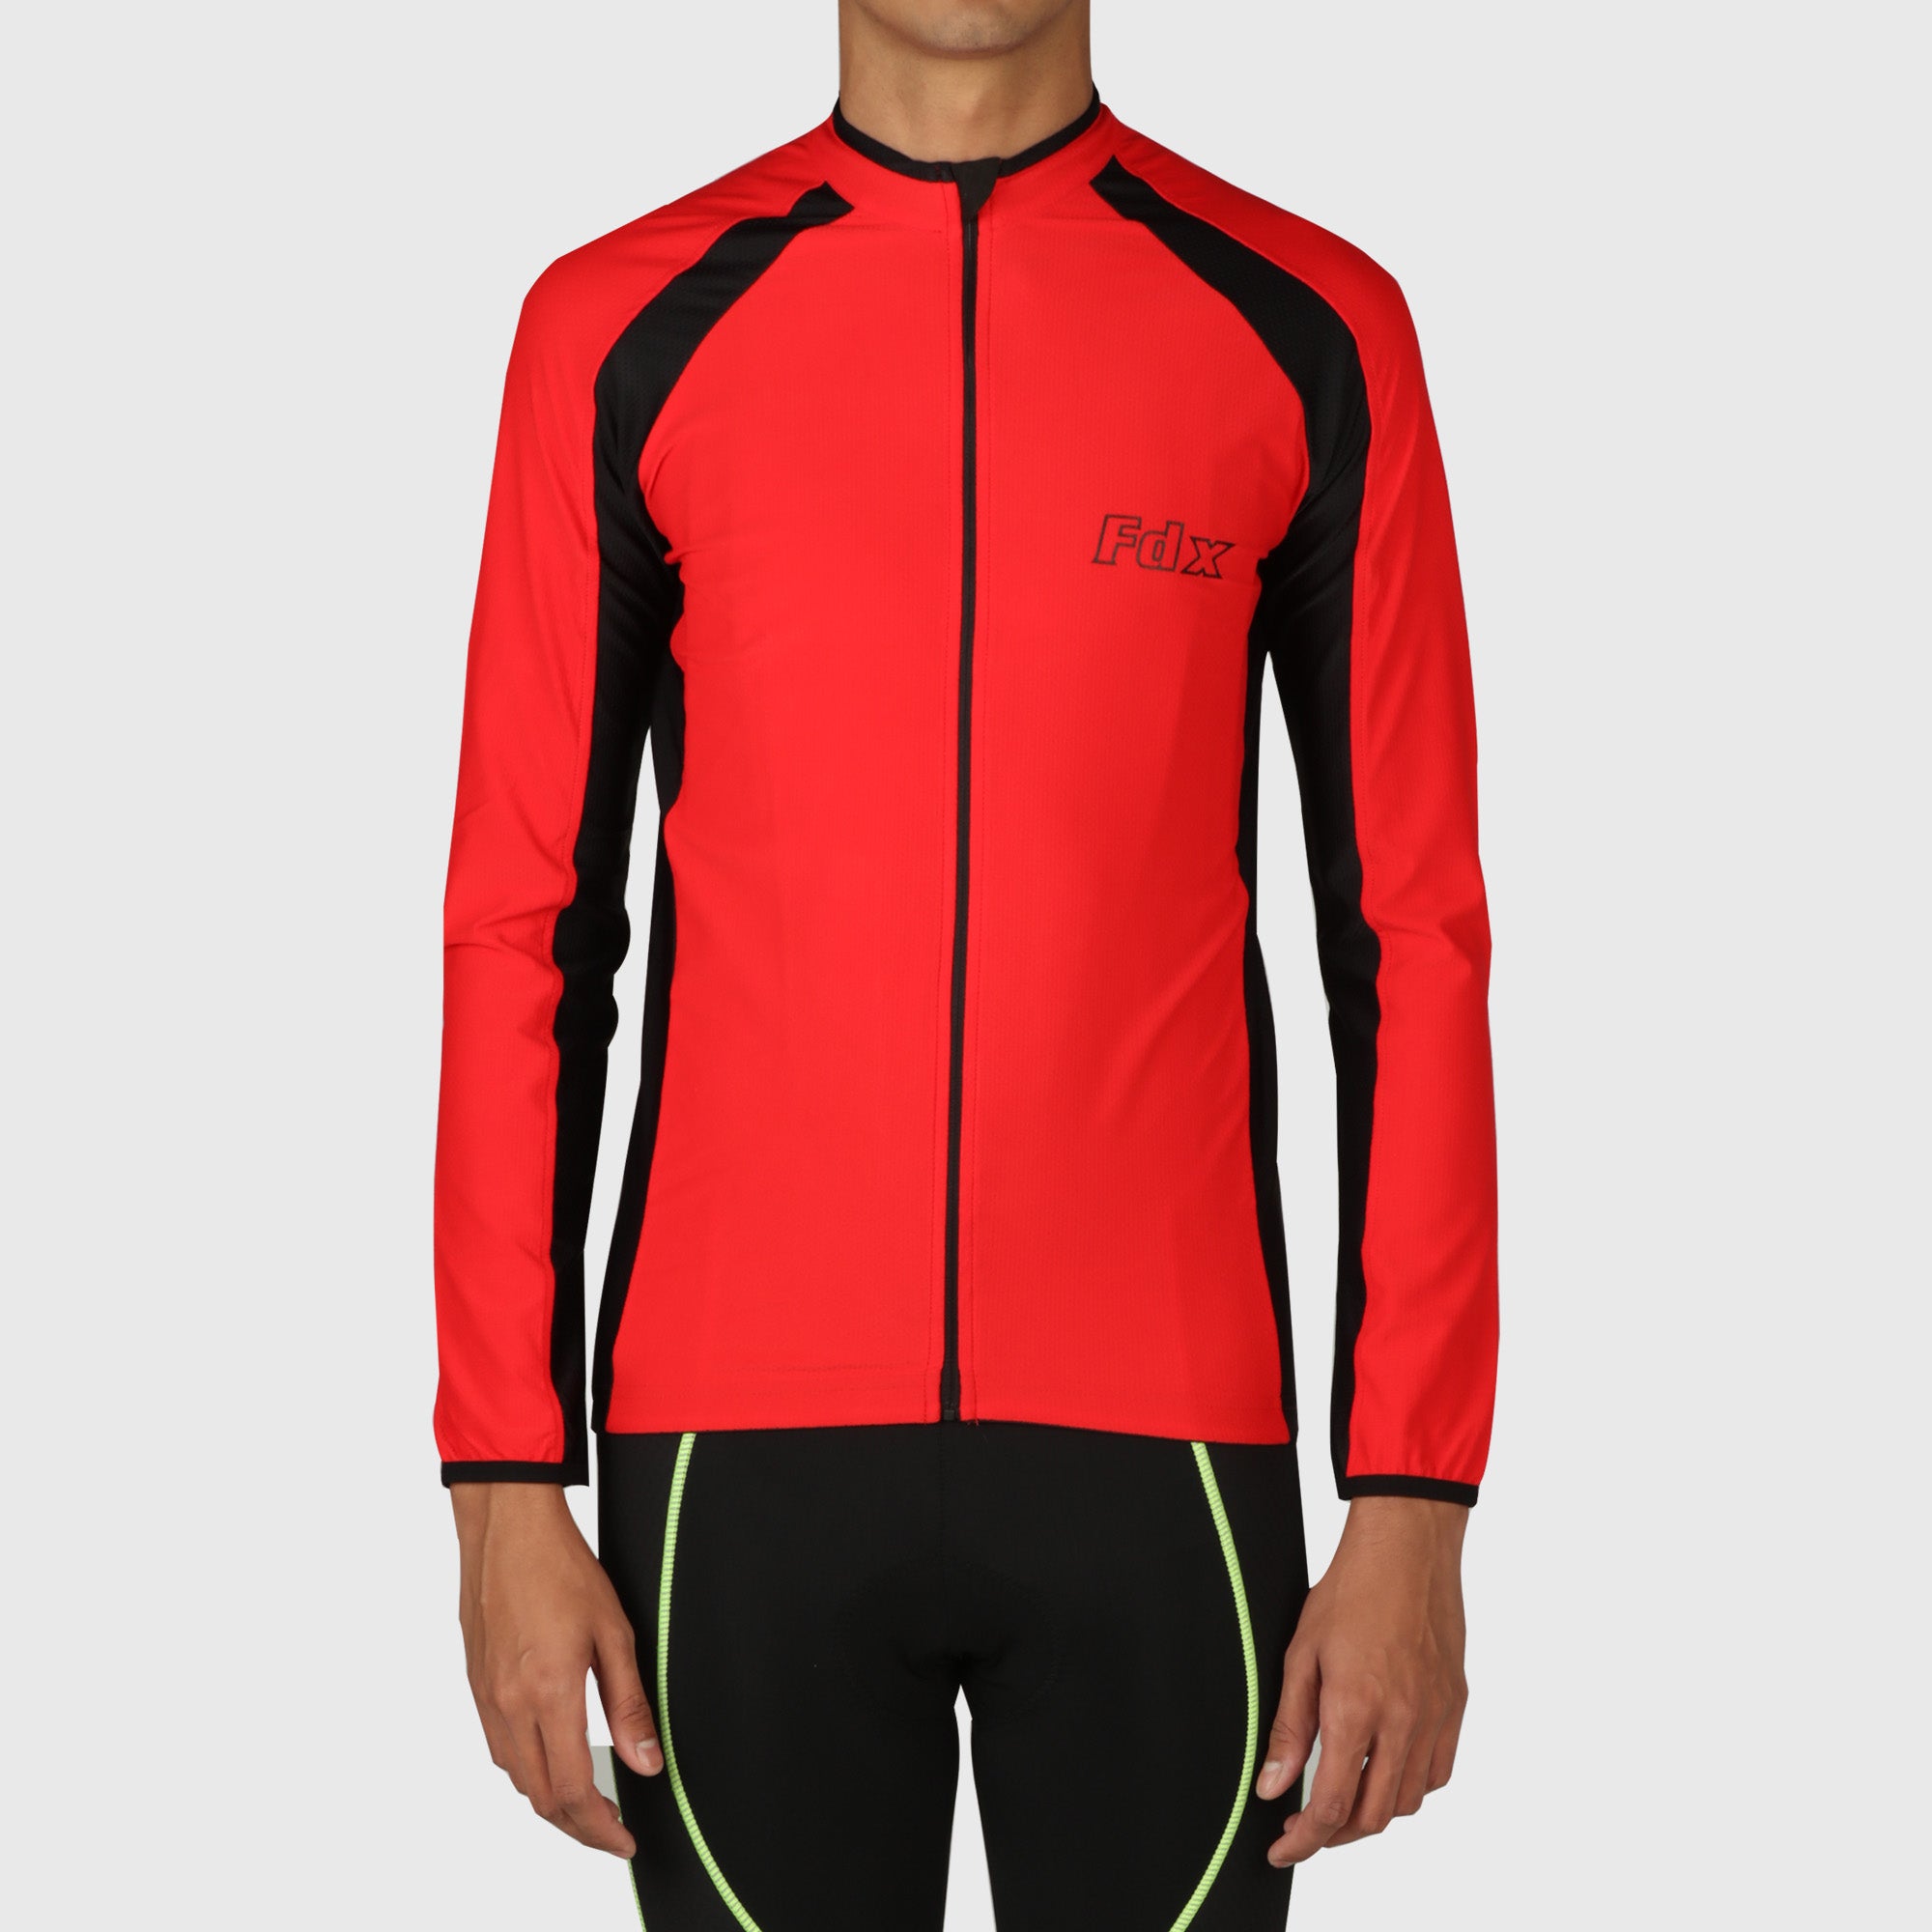 Fdx Mens Black & Red Long Sleeve Cycling Jersey for Winter Roubaix Thermal Fleece Road Bike Wear Top Full Zipper, Pockets & Hi-viz Reflectors - Transition